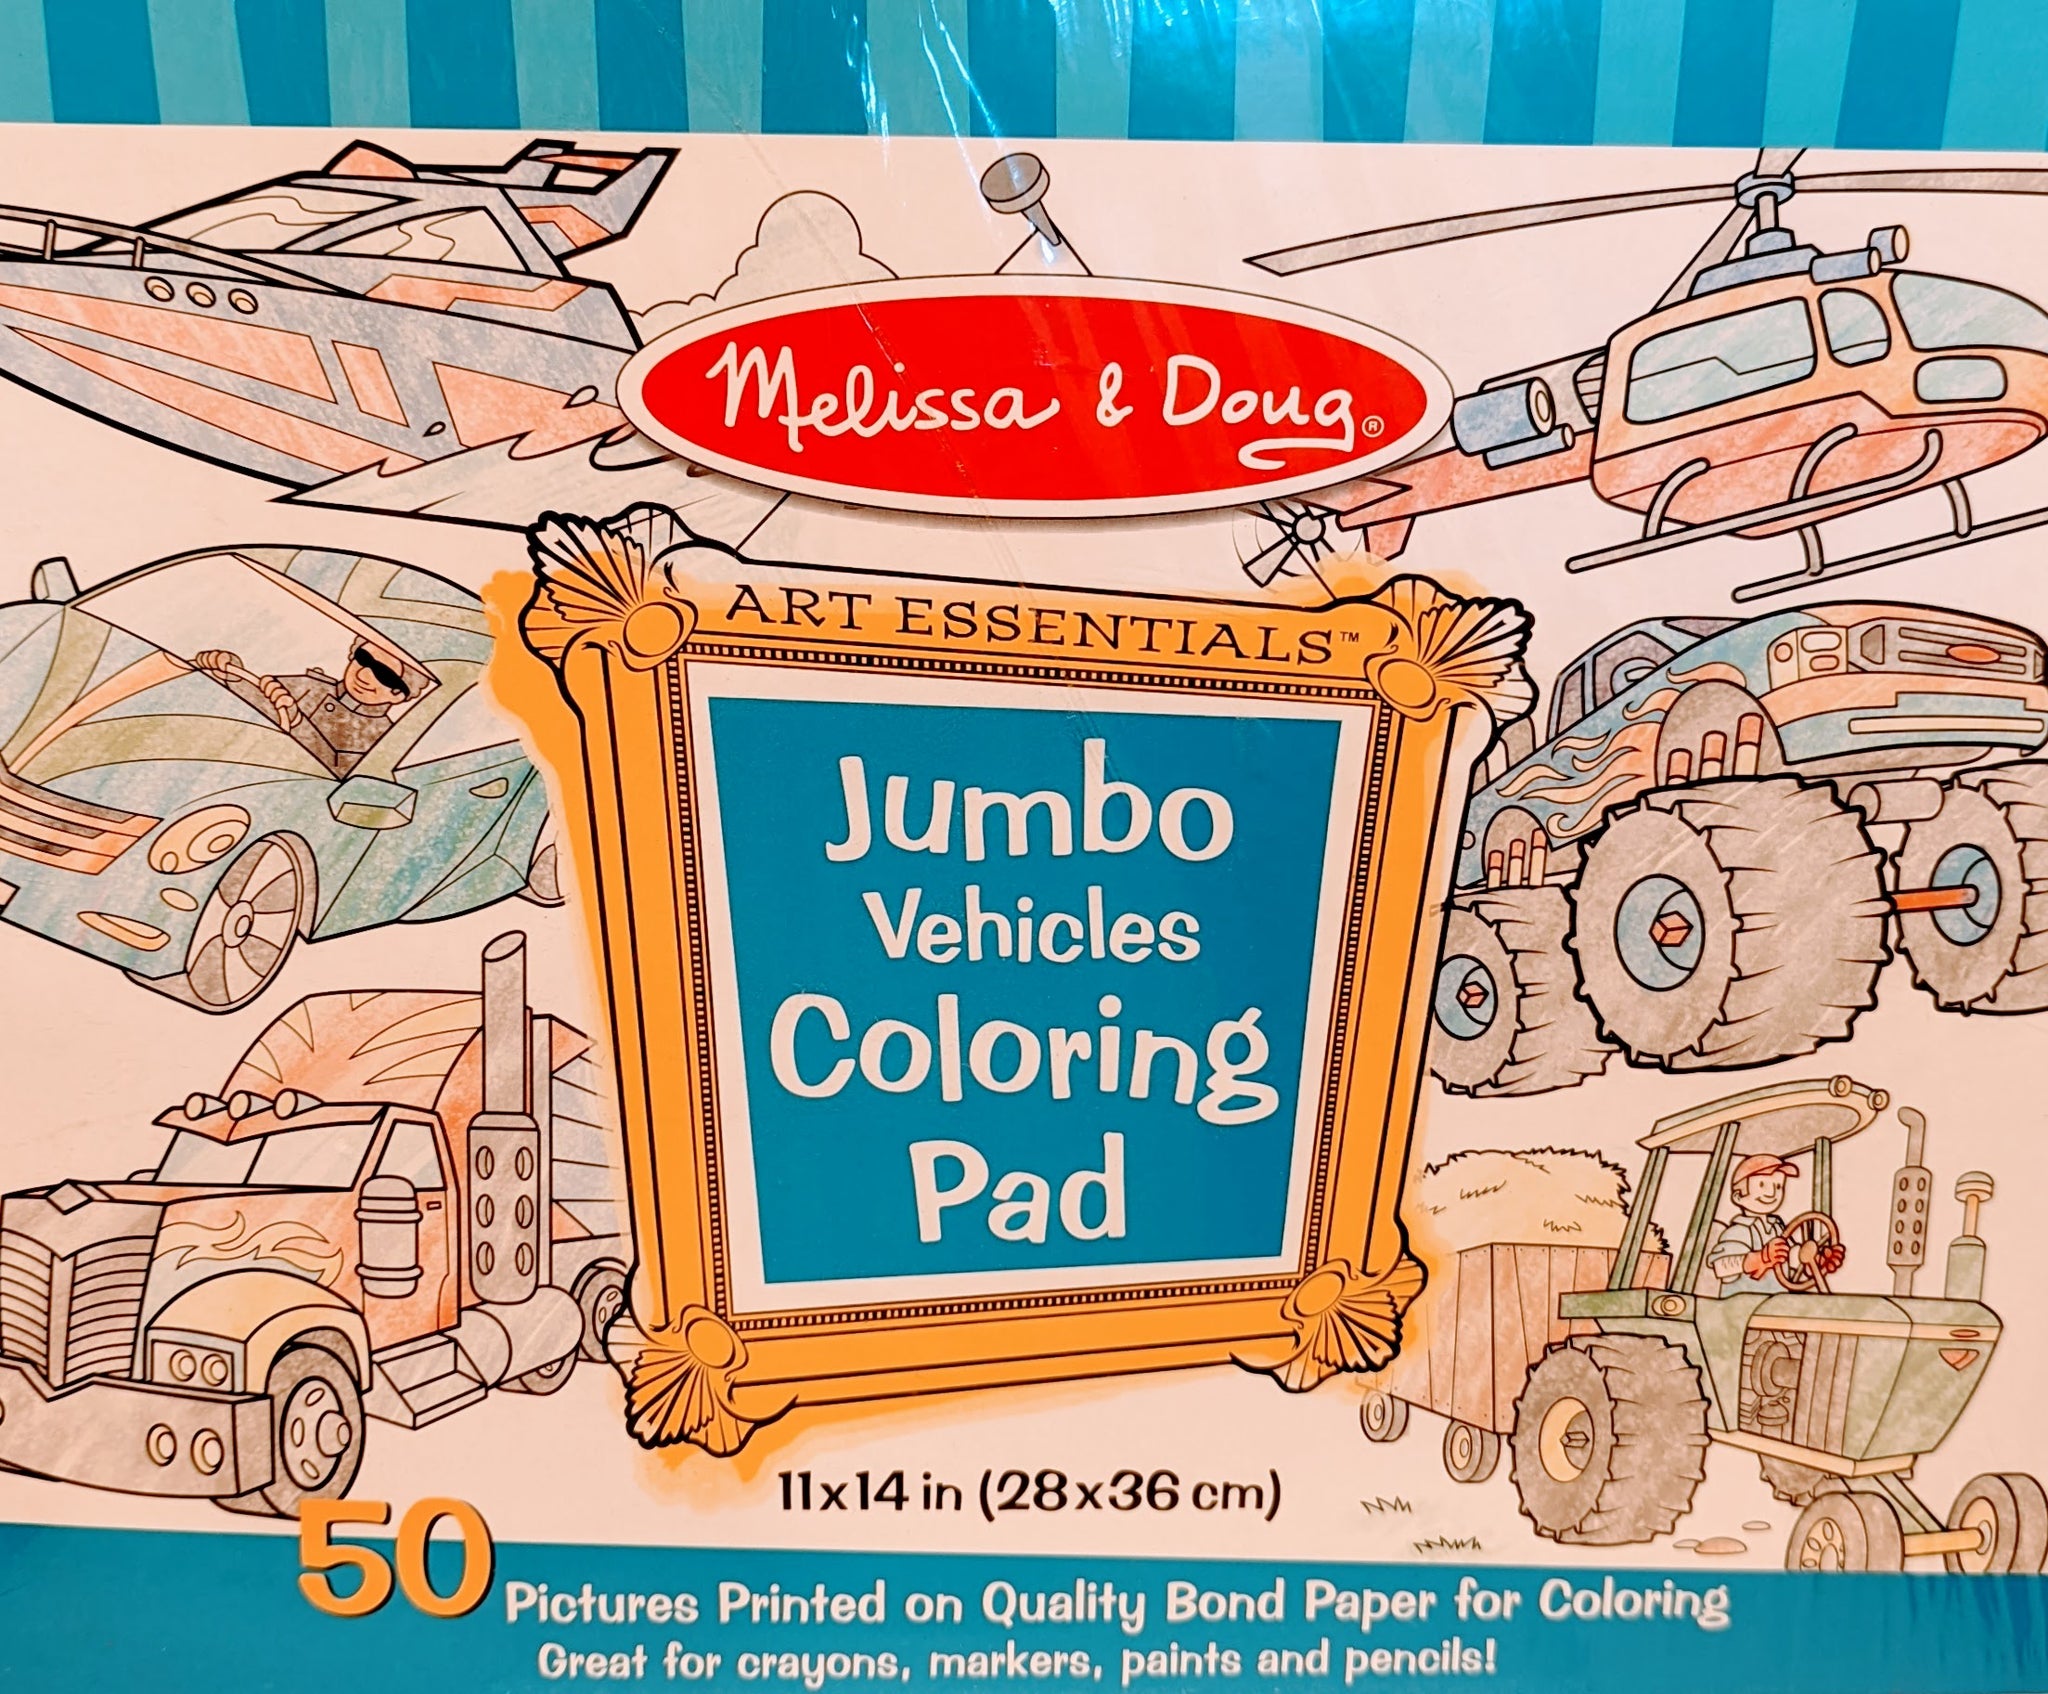 Melissa & Doug Jumbo Coloring Pad, Pink, 11 x 14